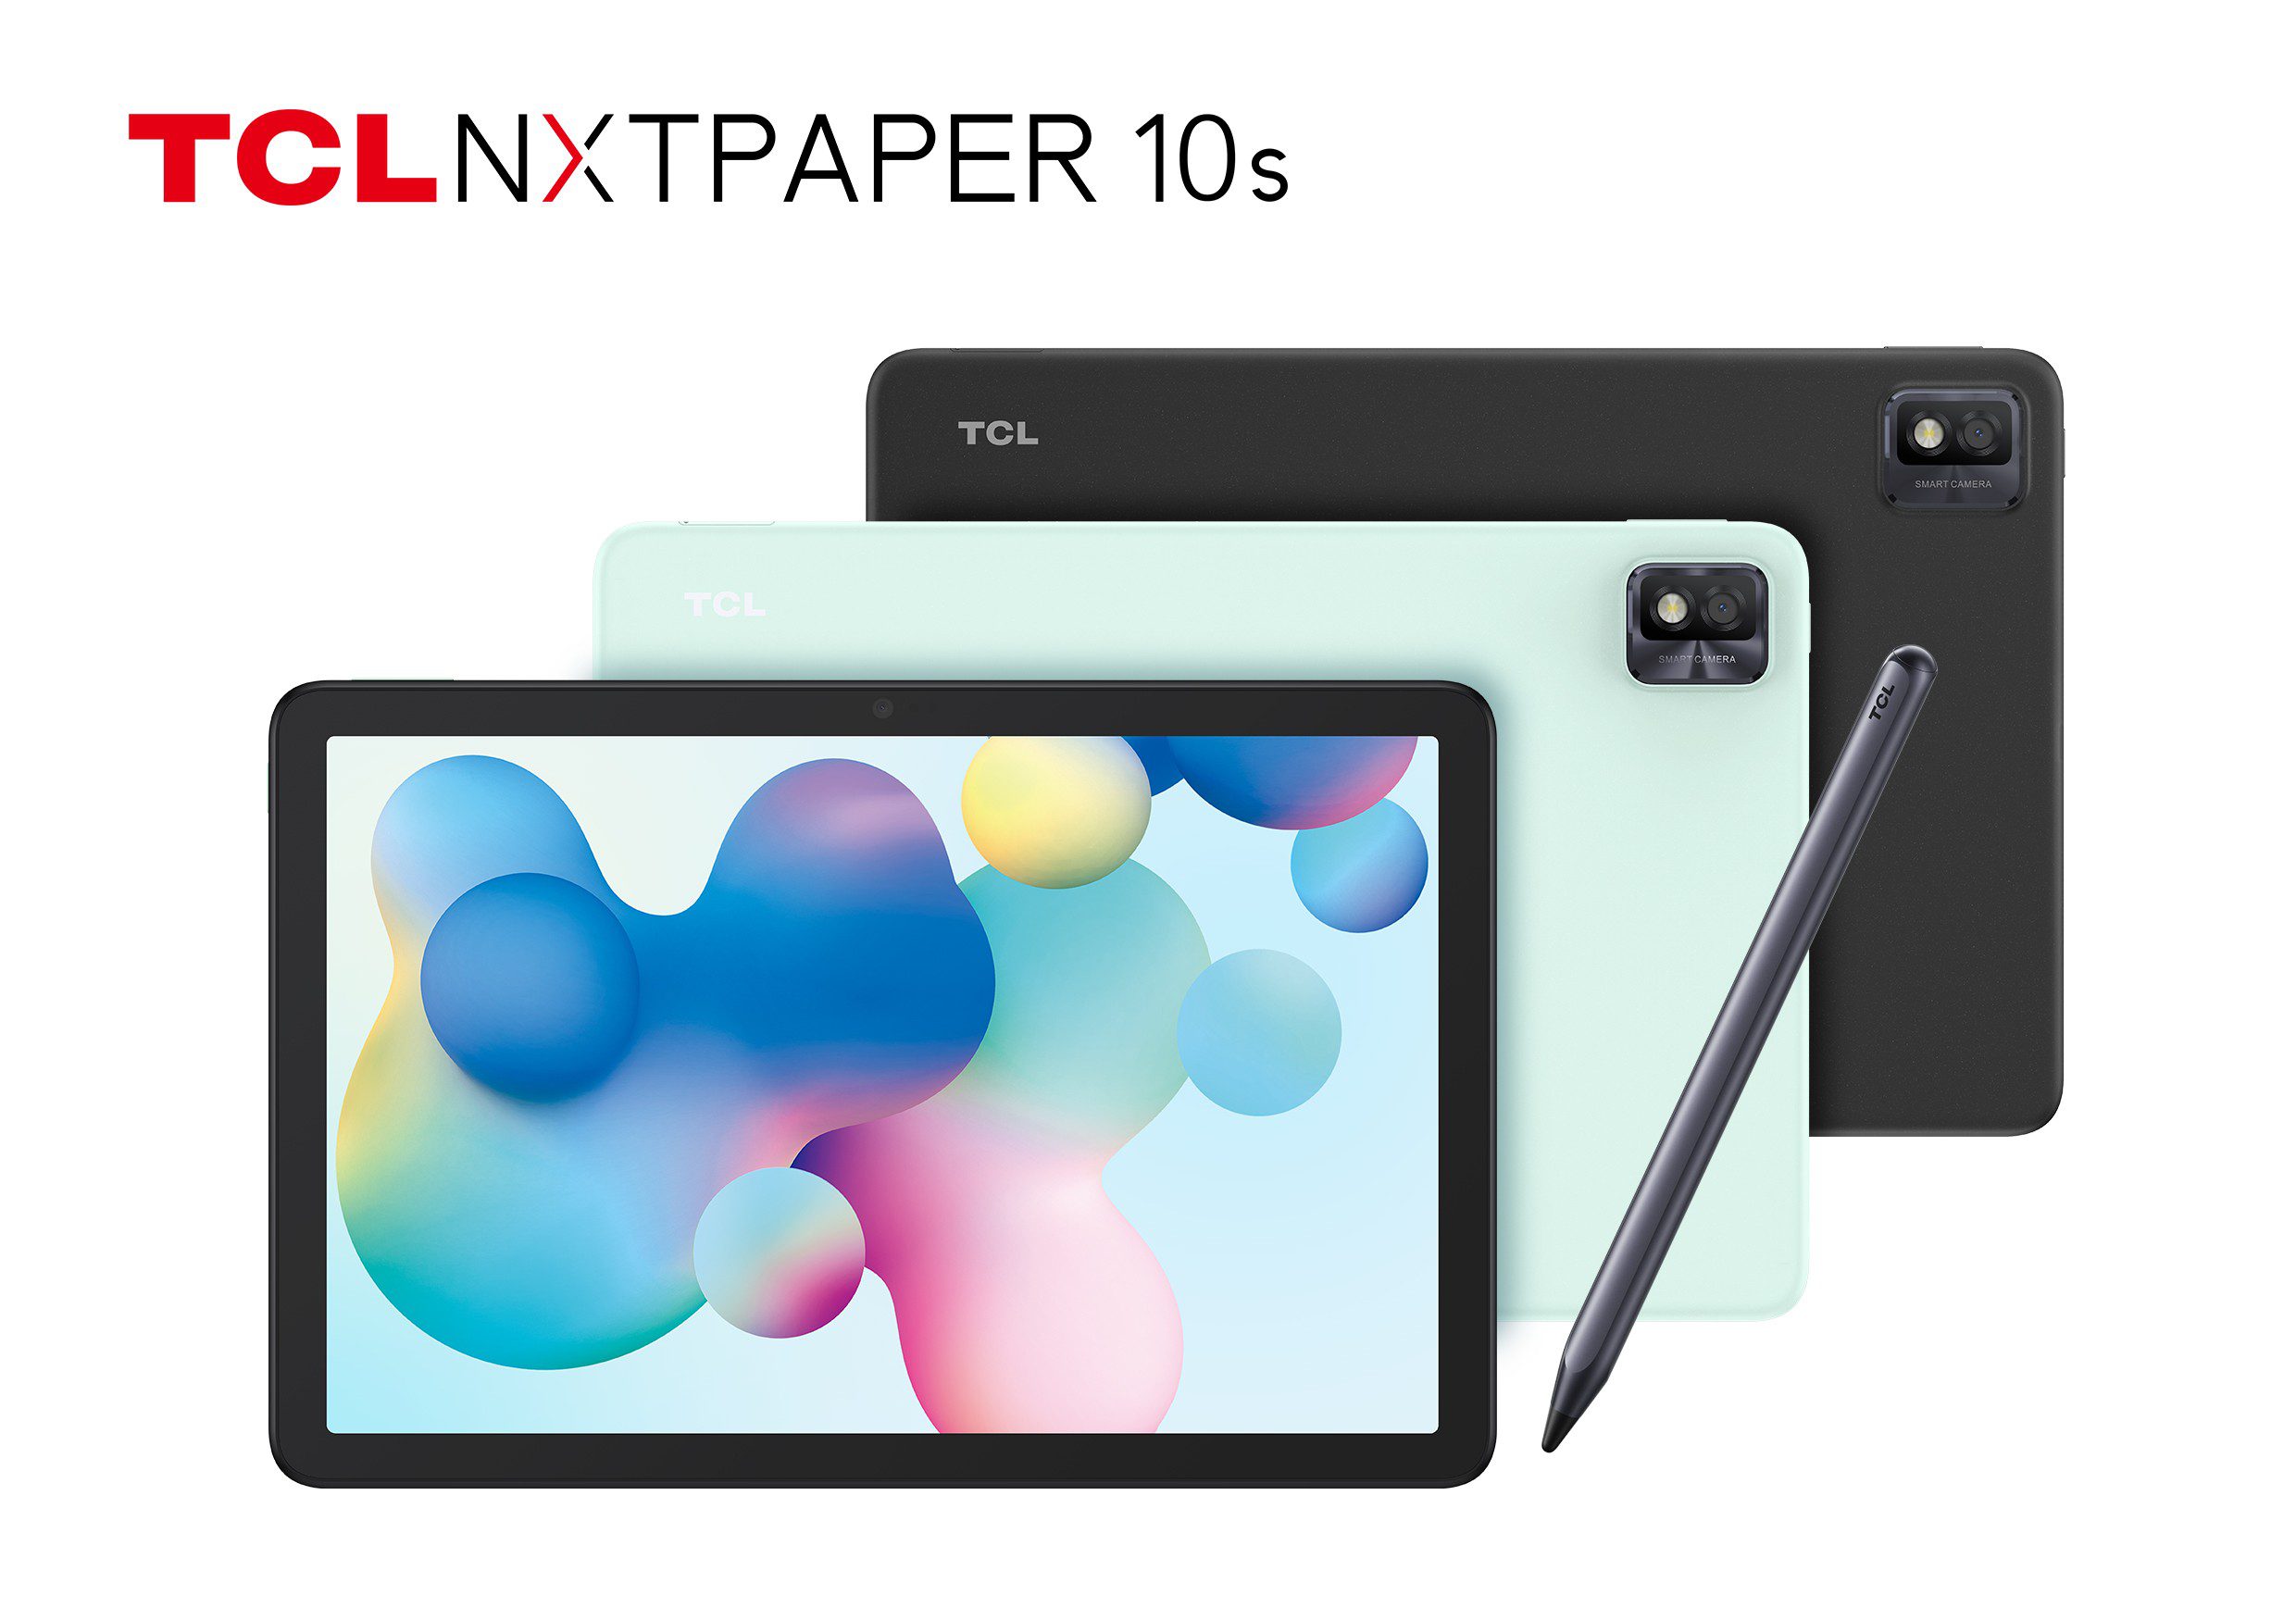 TCL NXTPAPER 10s: الجهاز اللوحي الجديد بشاشة تشبه الورق يصل إلى إيطاليا 1